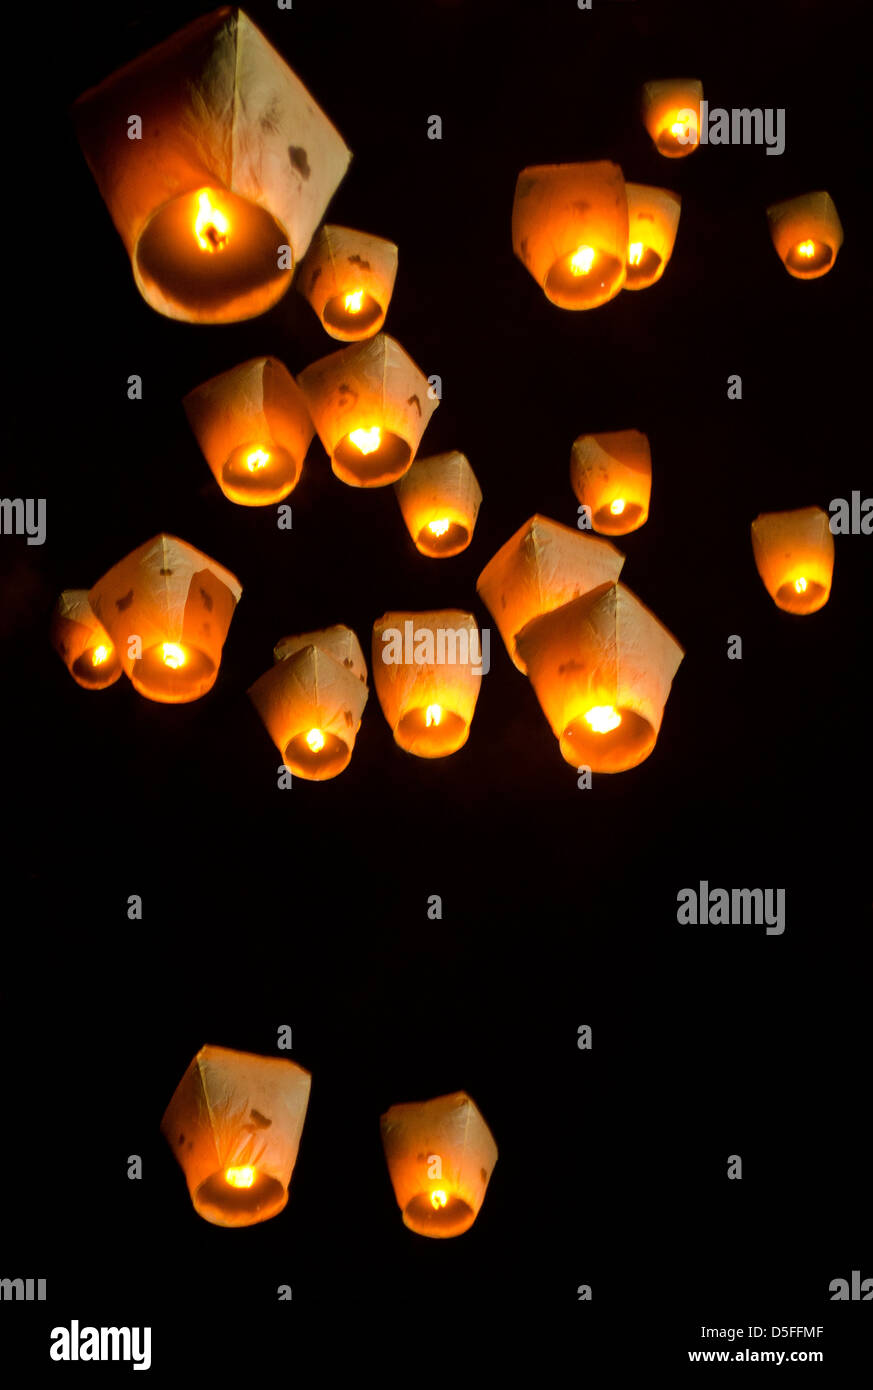 Linternas voladoras fotografías e imágenes de alta resolución - Alamy